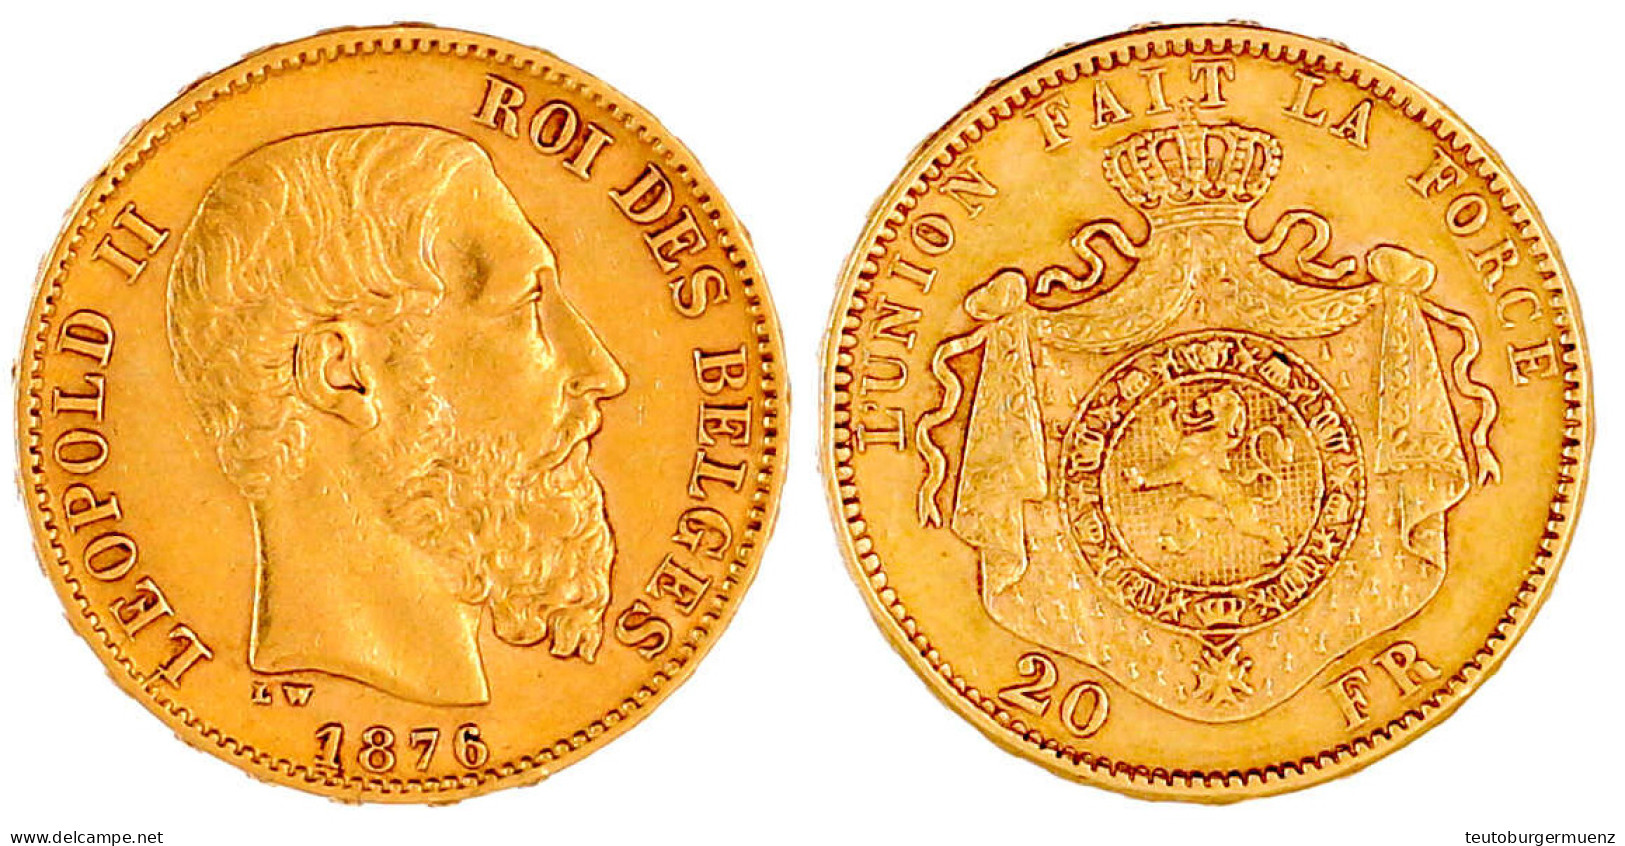 20 Francs 1876. Pos. A. 6,45 G. 900/1000. Vorzüglich. Krause/Mishler 37. - 20 Francs (oro)